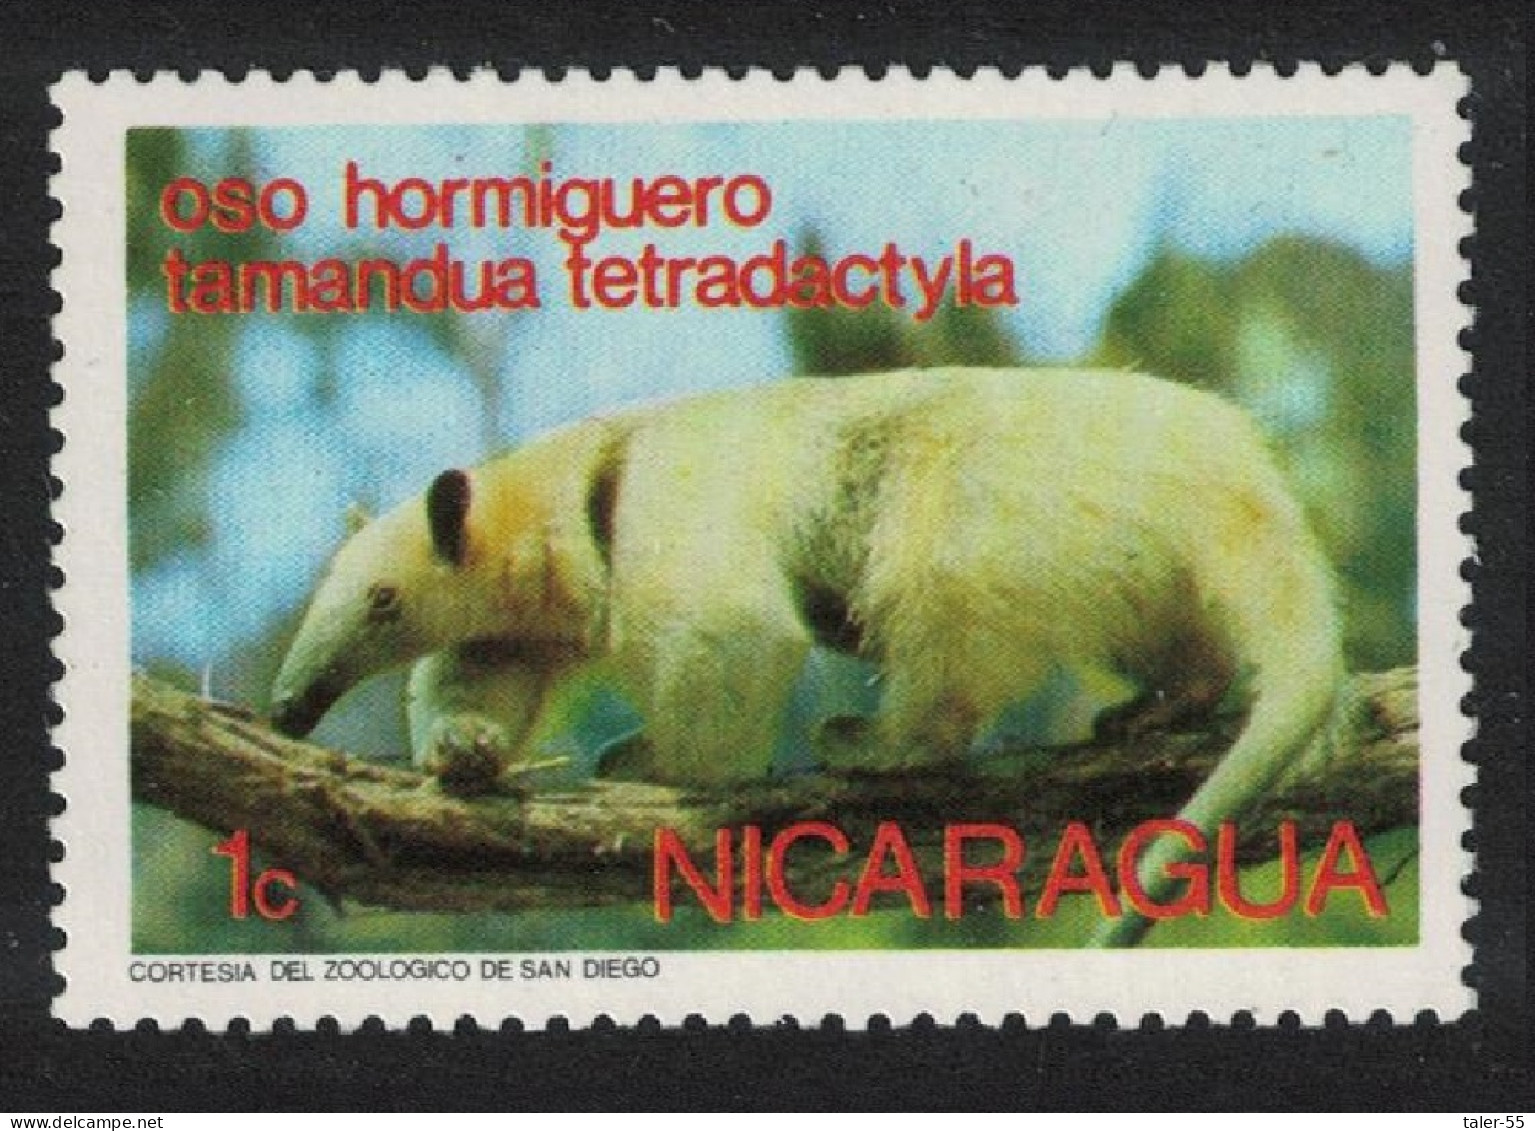 Nicaragua Tamandua Wild Anima Fauna 1974 MNH SG#1947 - Nicaragua